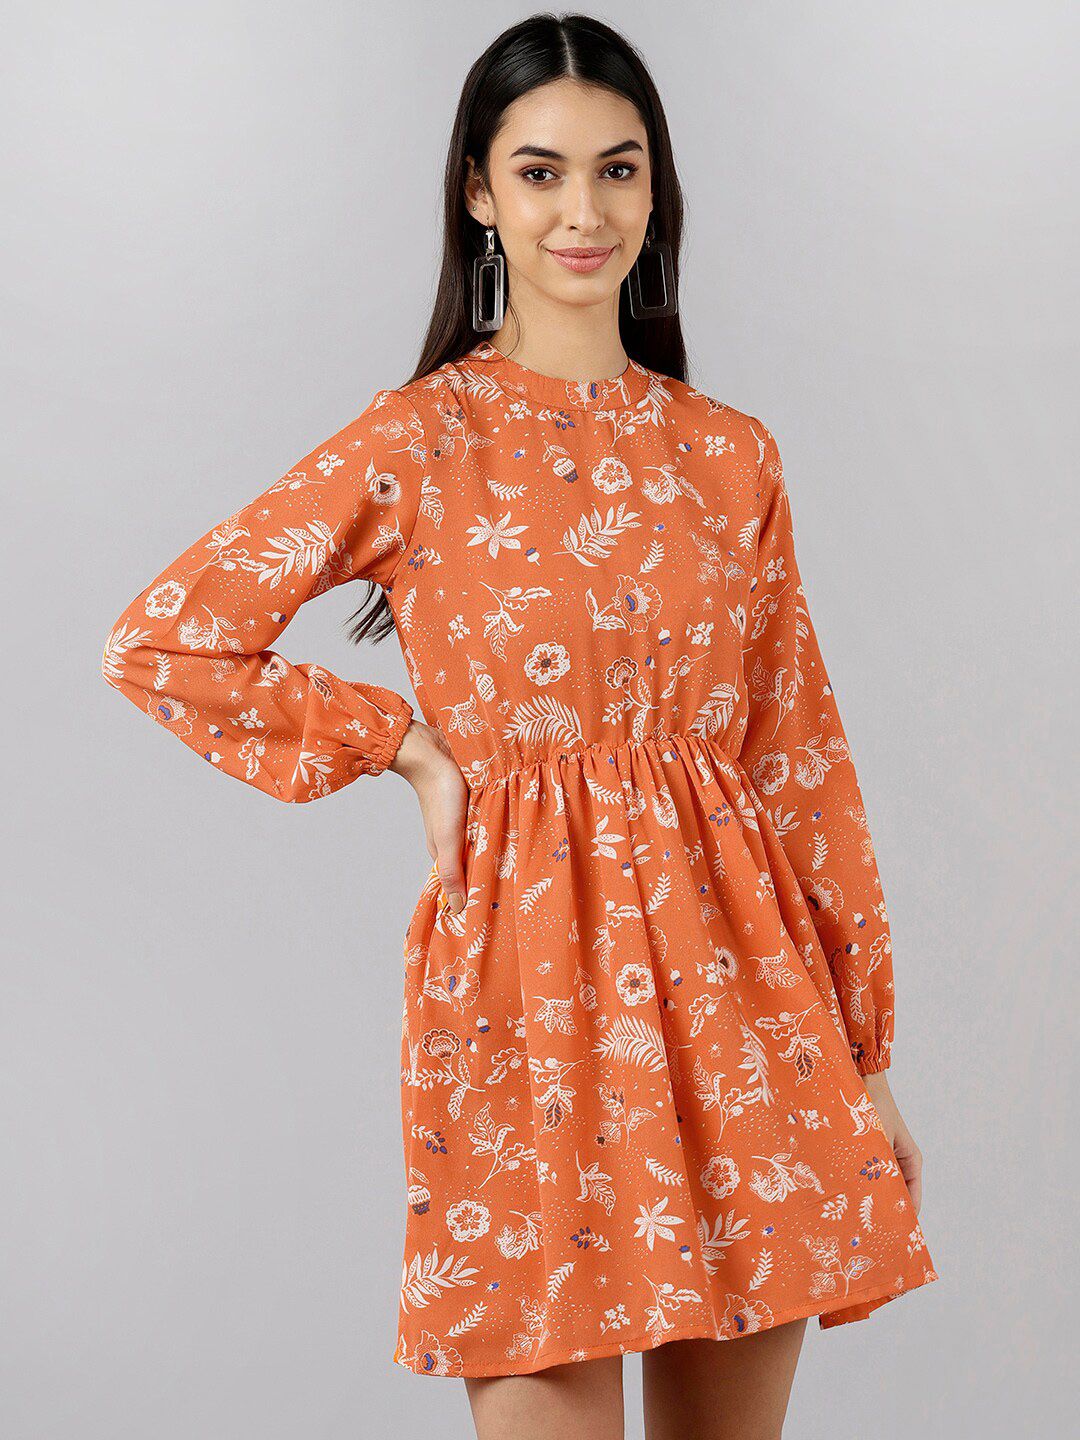 AHIKA Orange Floral Crepe Fit & Flare Dress Price in India